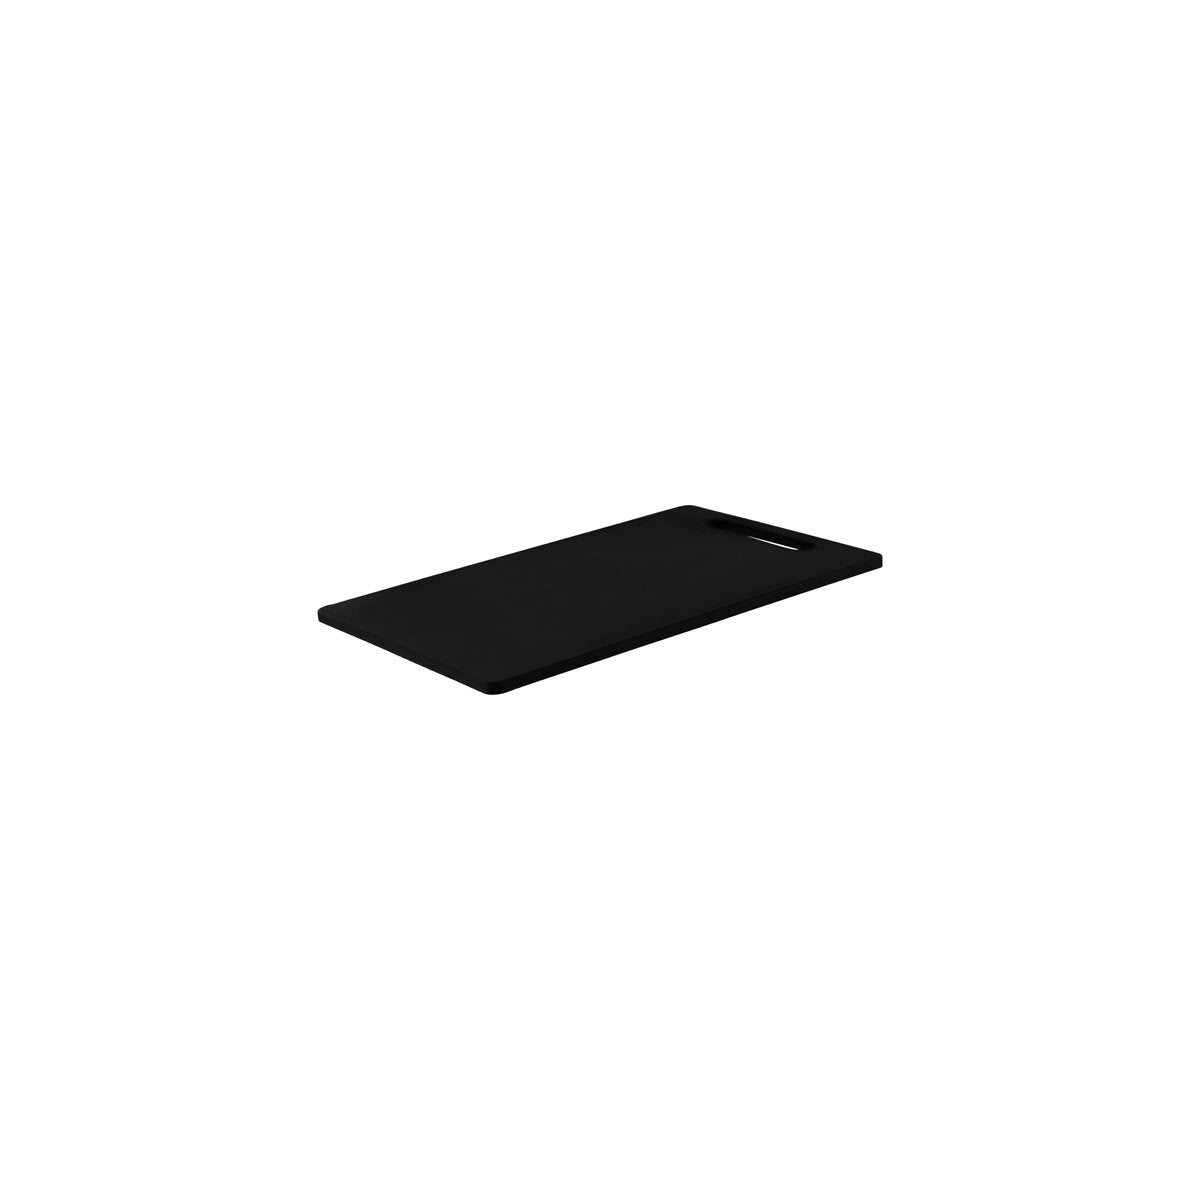 04311-BK Chef Inox Cutting Board Polyethylene Black with Handle 200x270x12mm Tomkin Australia Hospitality Supplies